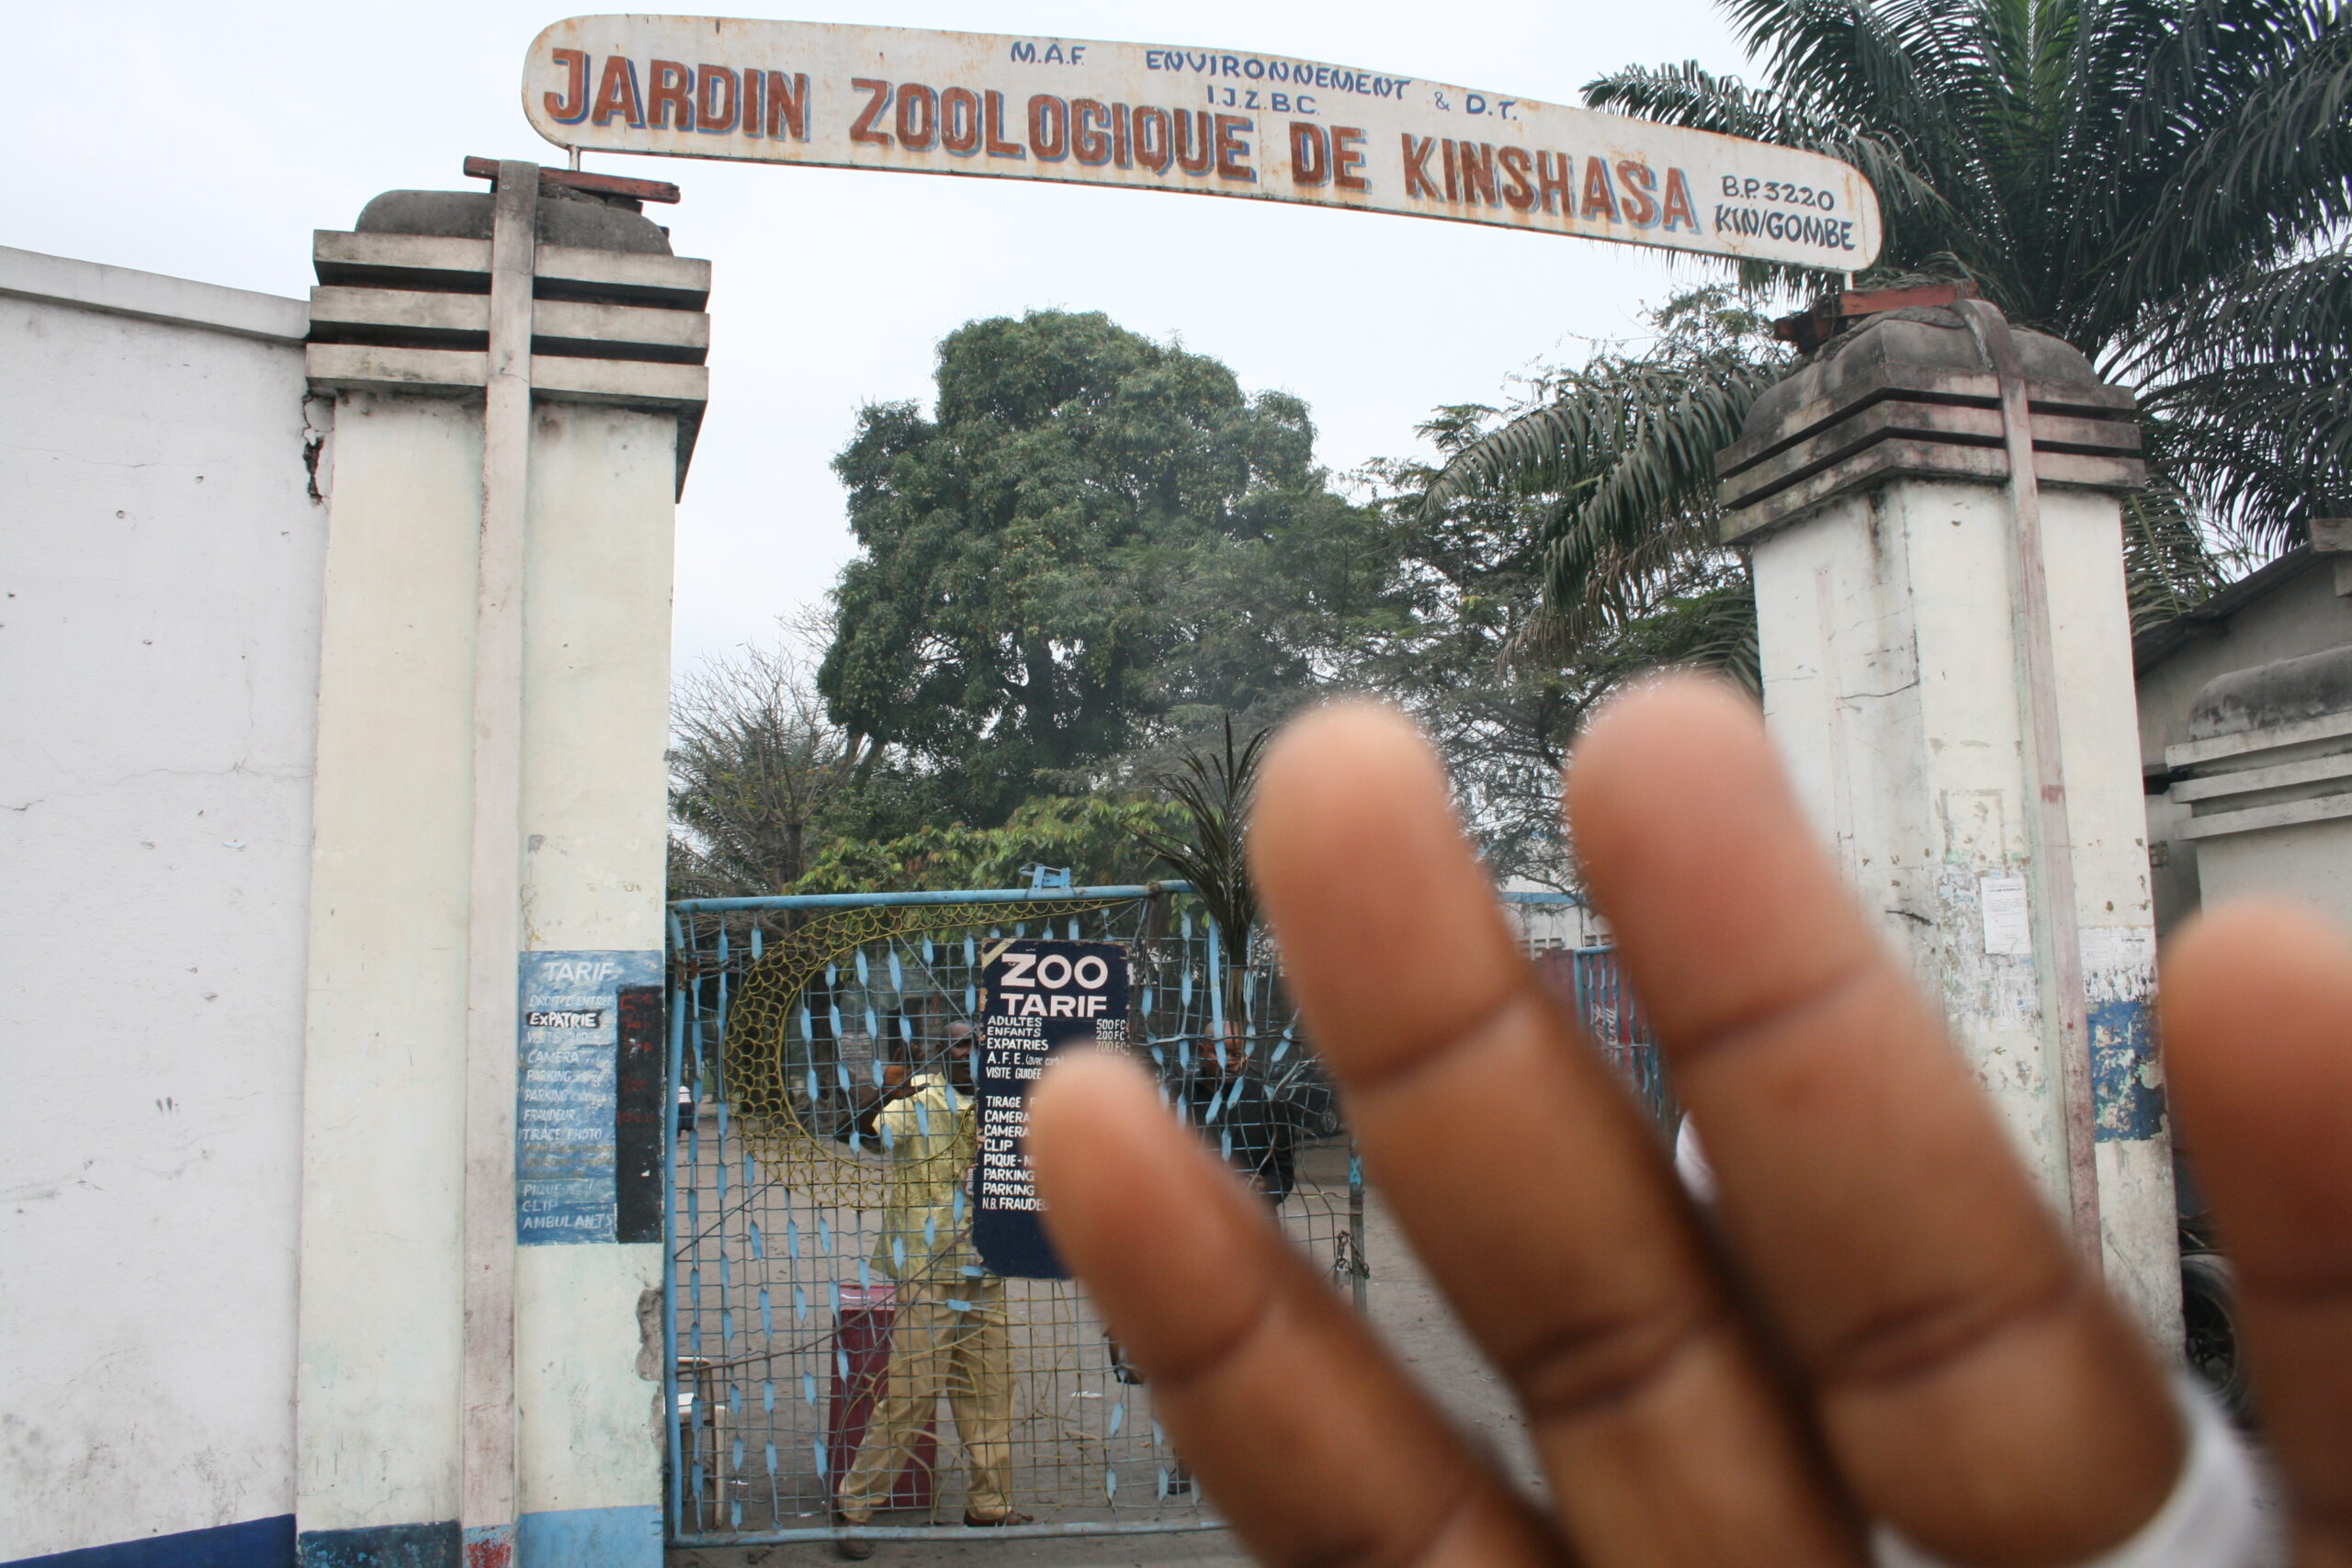 Kinshasa Zoo, Jardin Zoologique de Kinshasa